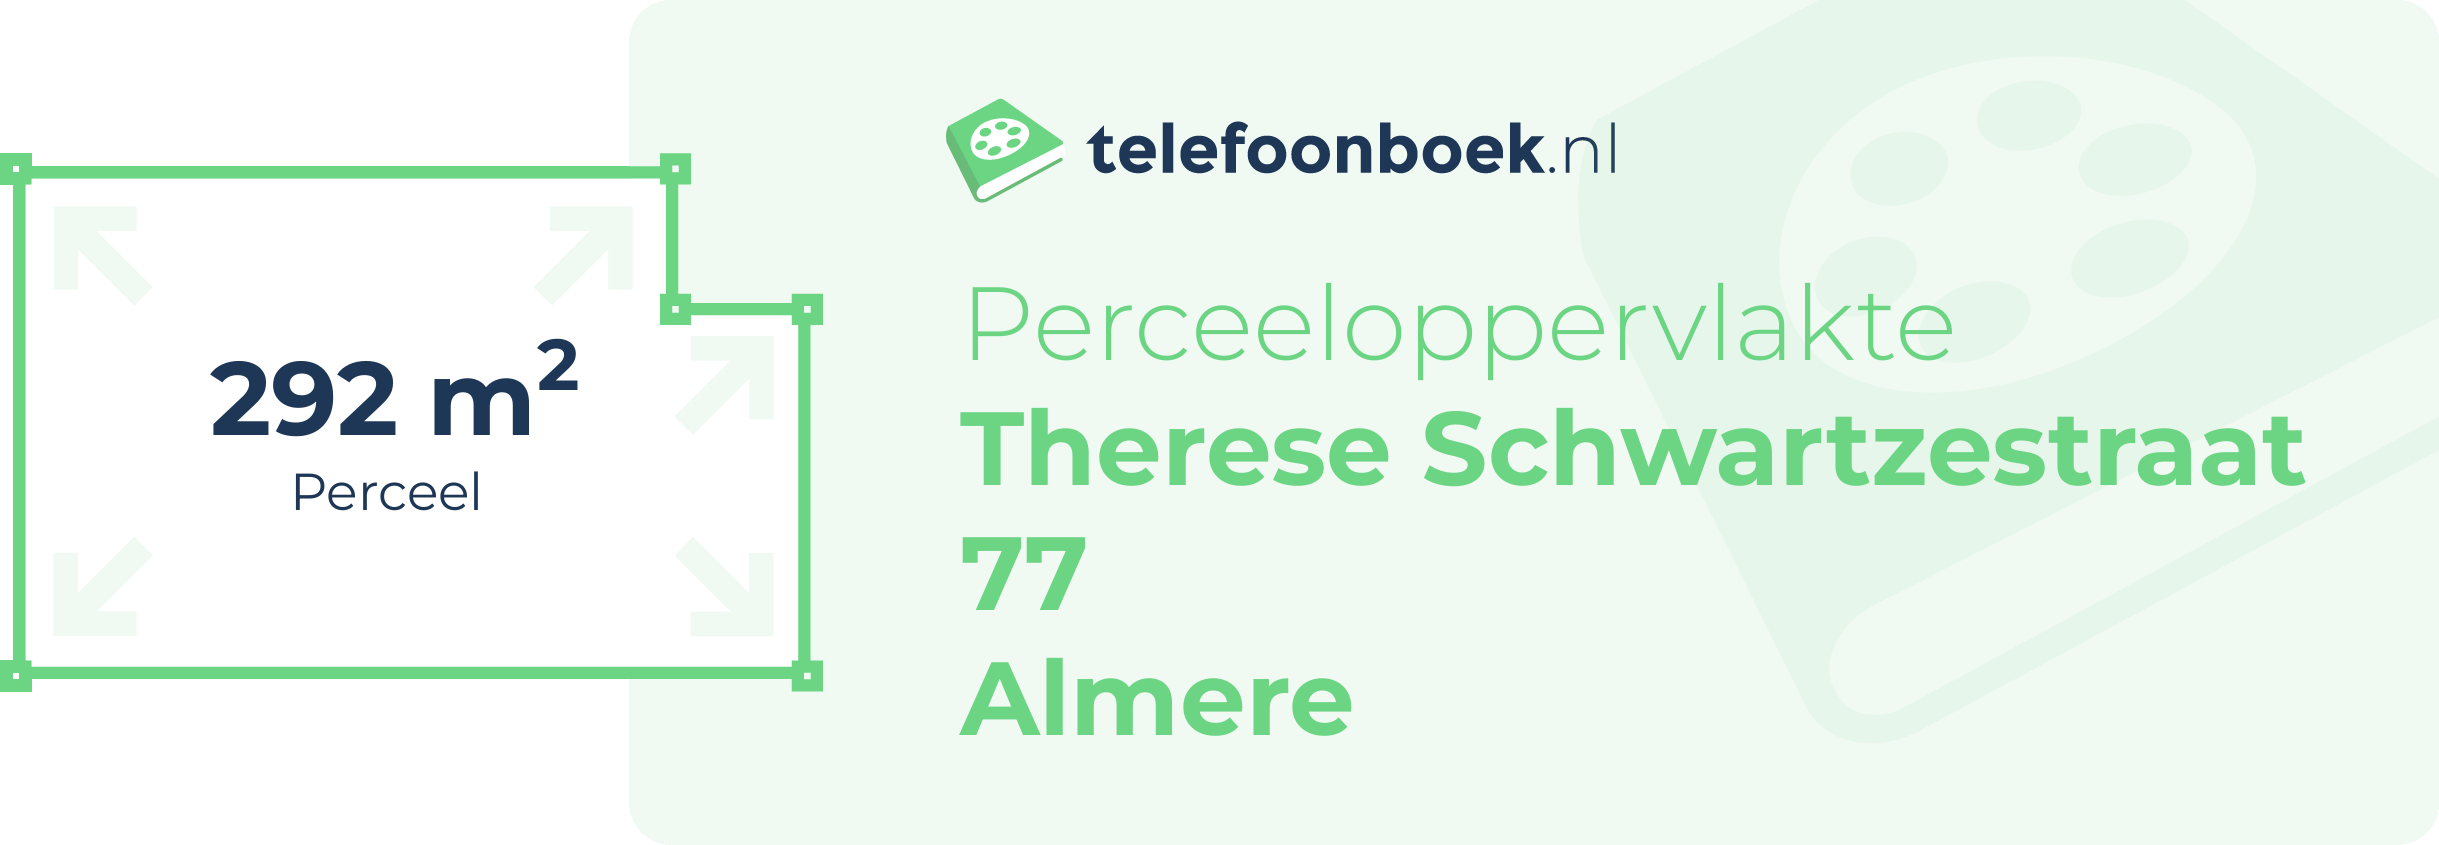 Perceeloppervlakte Therese Schwartzestraat 77 Almere